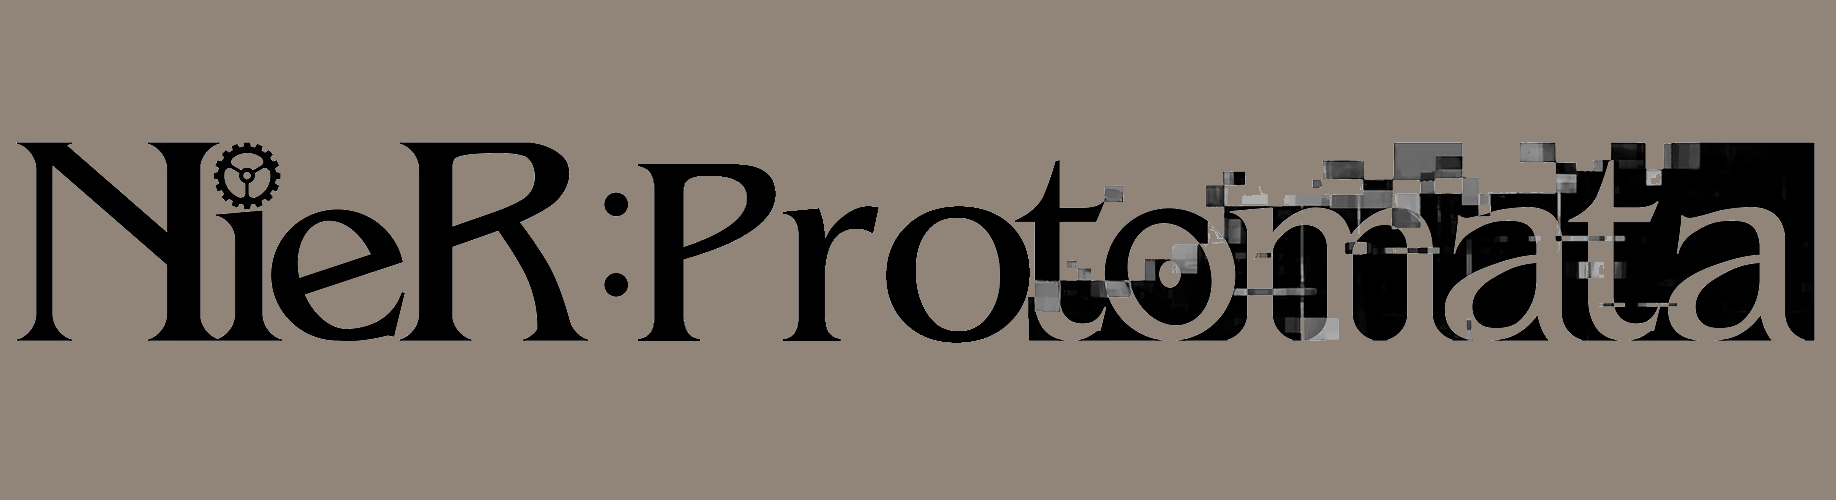 NieR:Protomata